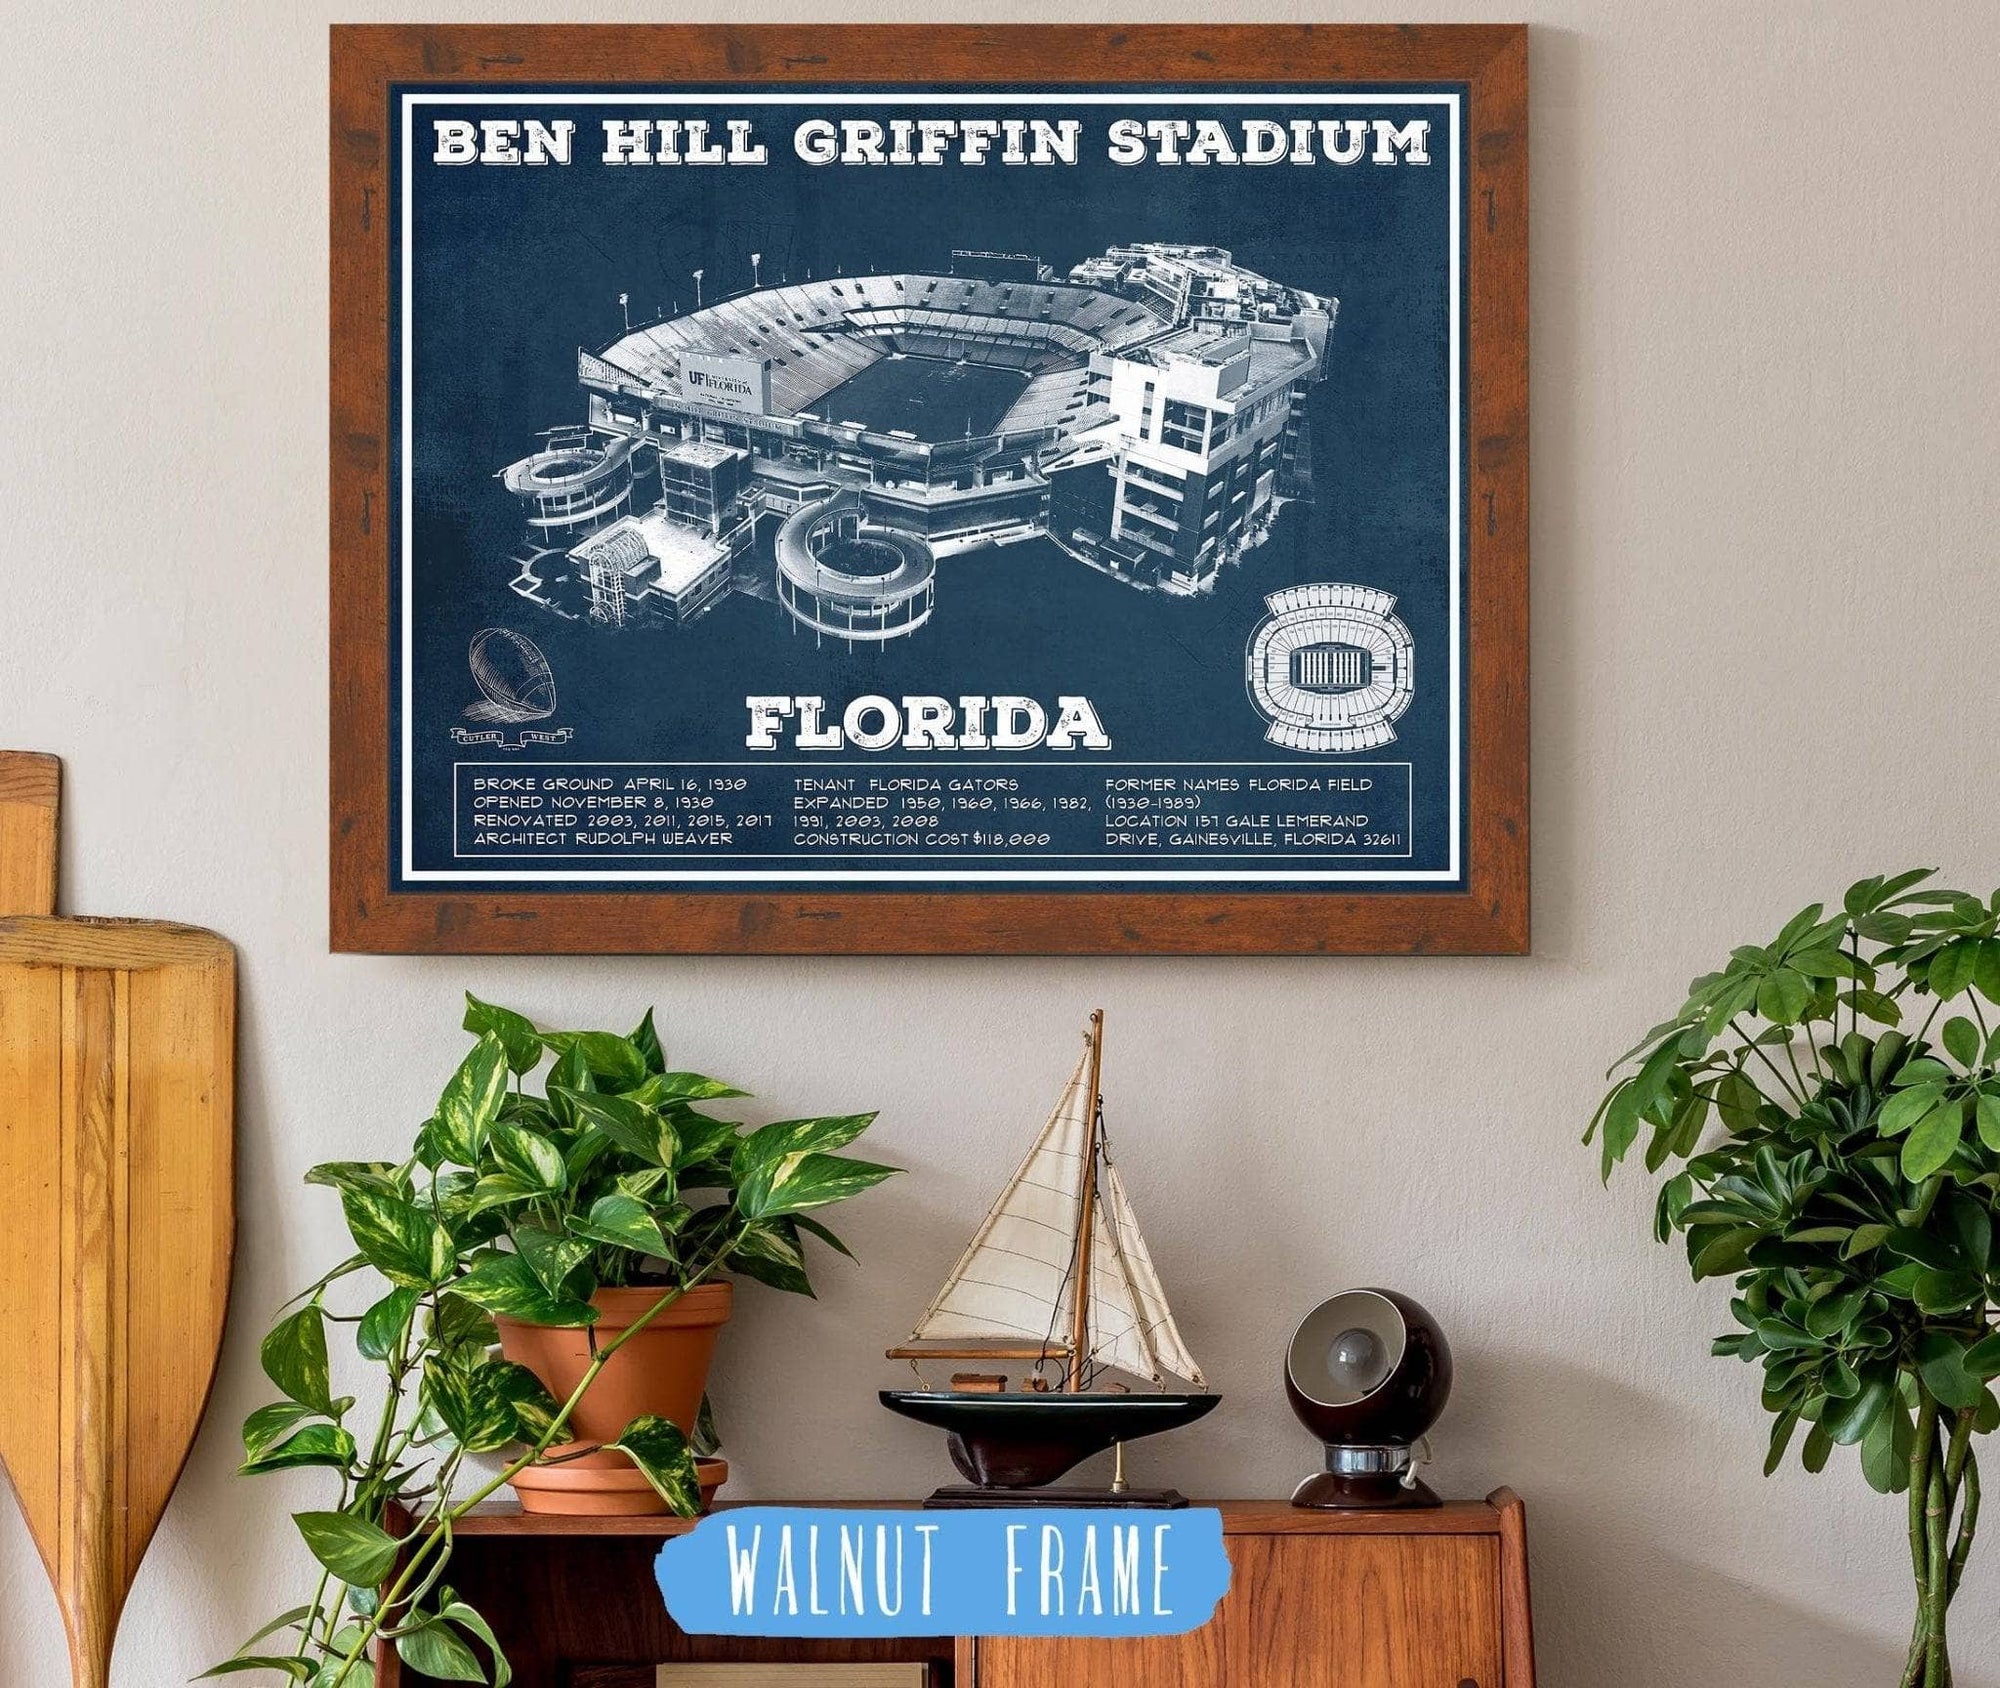 Cutler West Pro Football Collection 14" x 11" / Walnut Frame Ben Hill Griffin Stadium Art - University of Florida Gators Vintage Stadium Art Print 736879125_35276